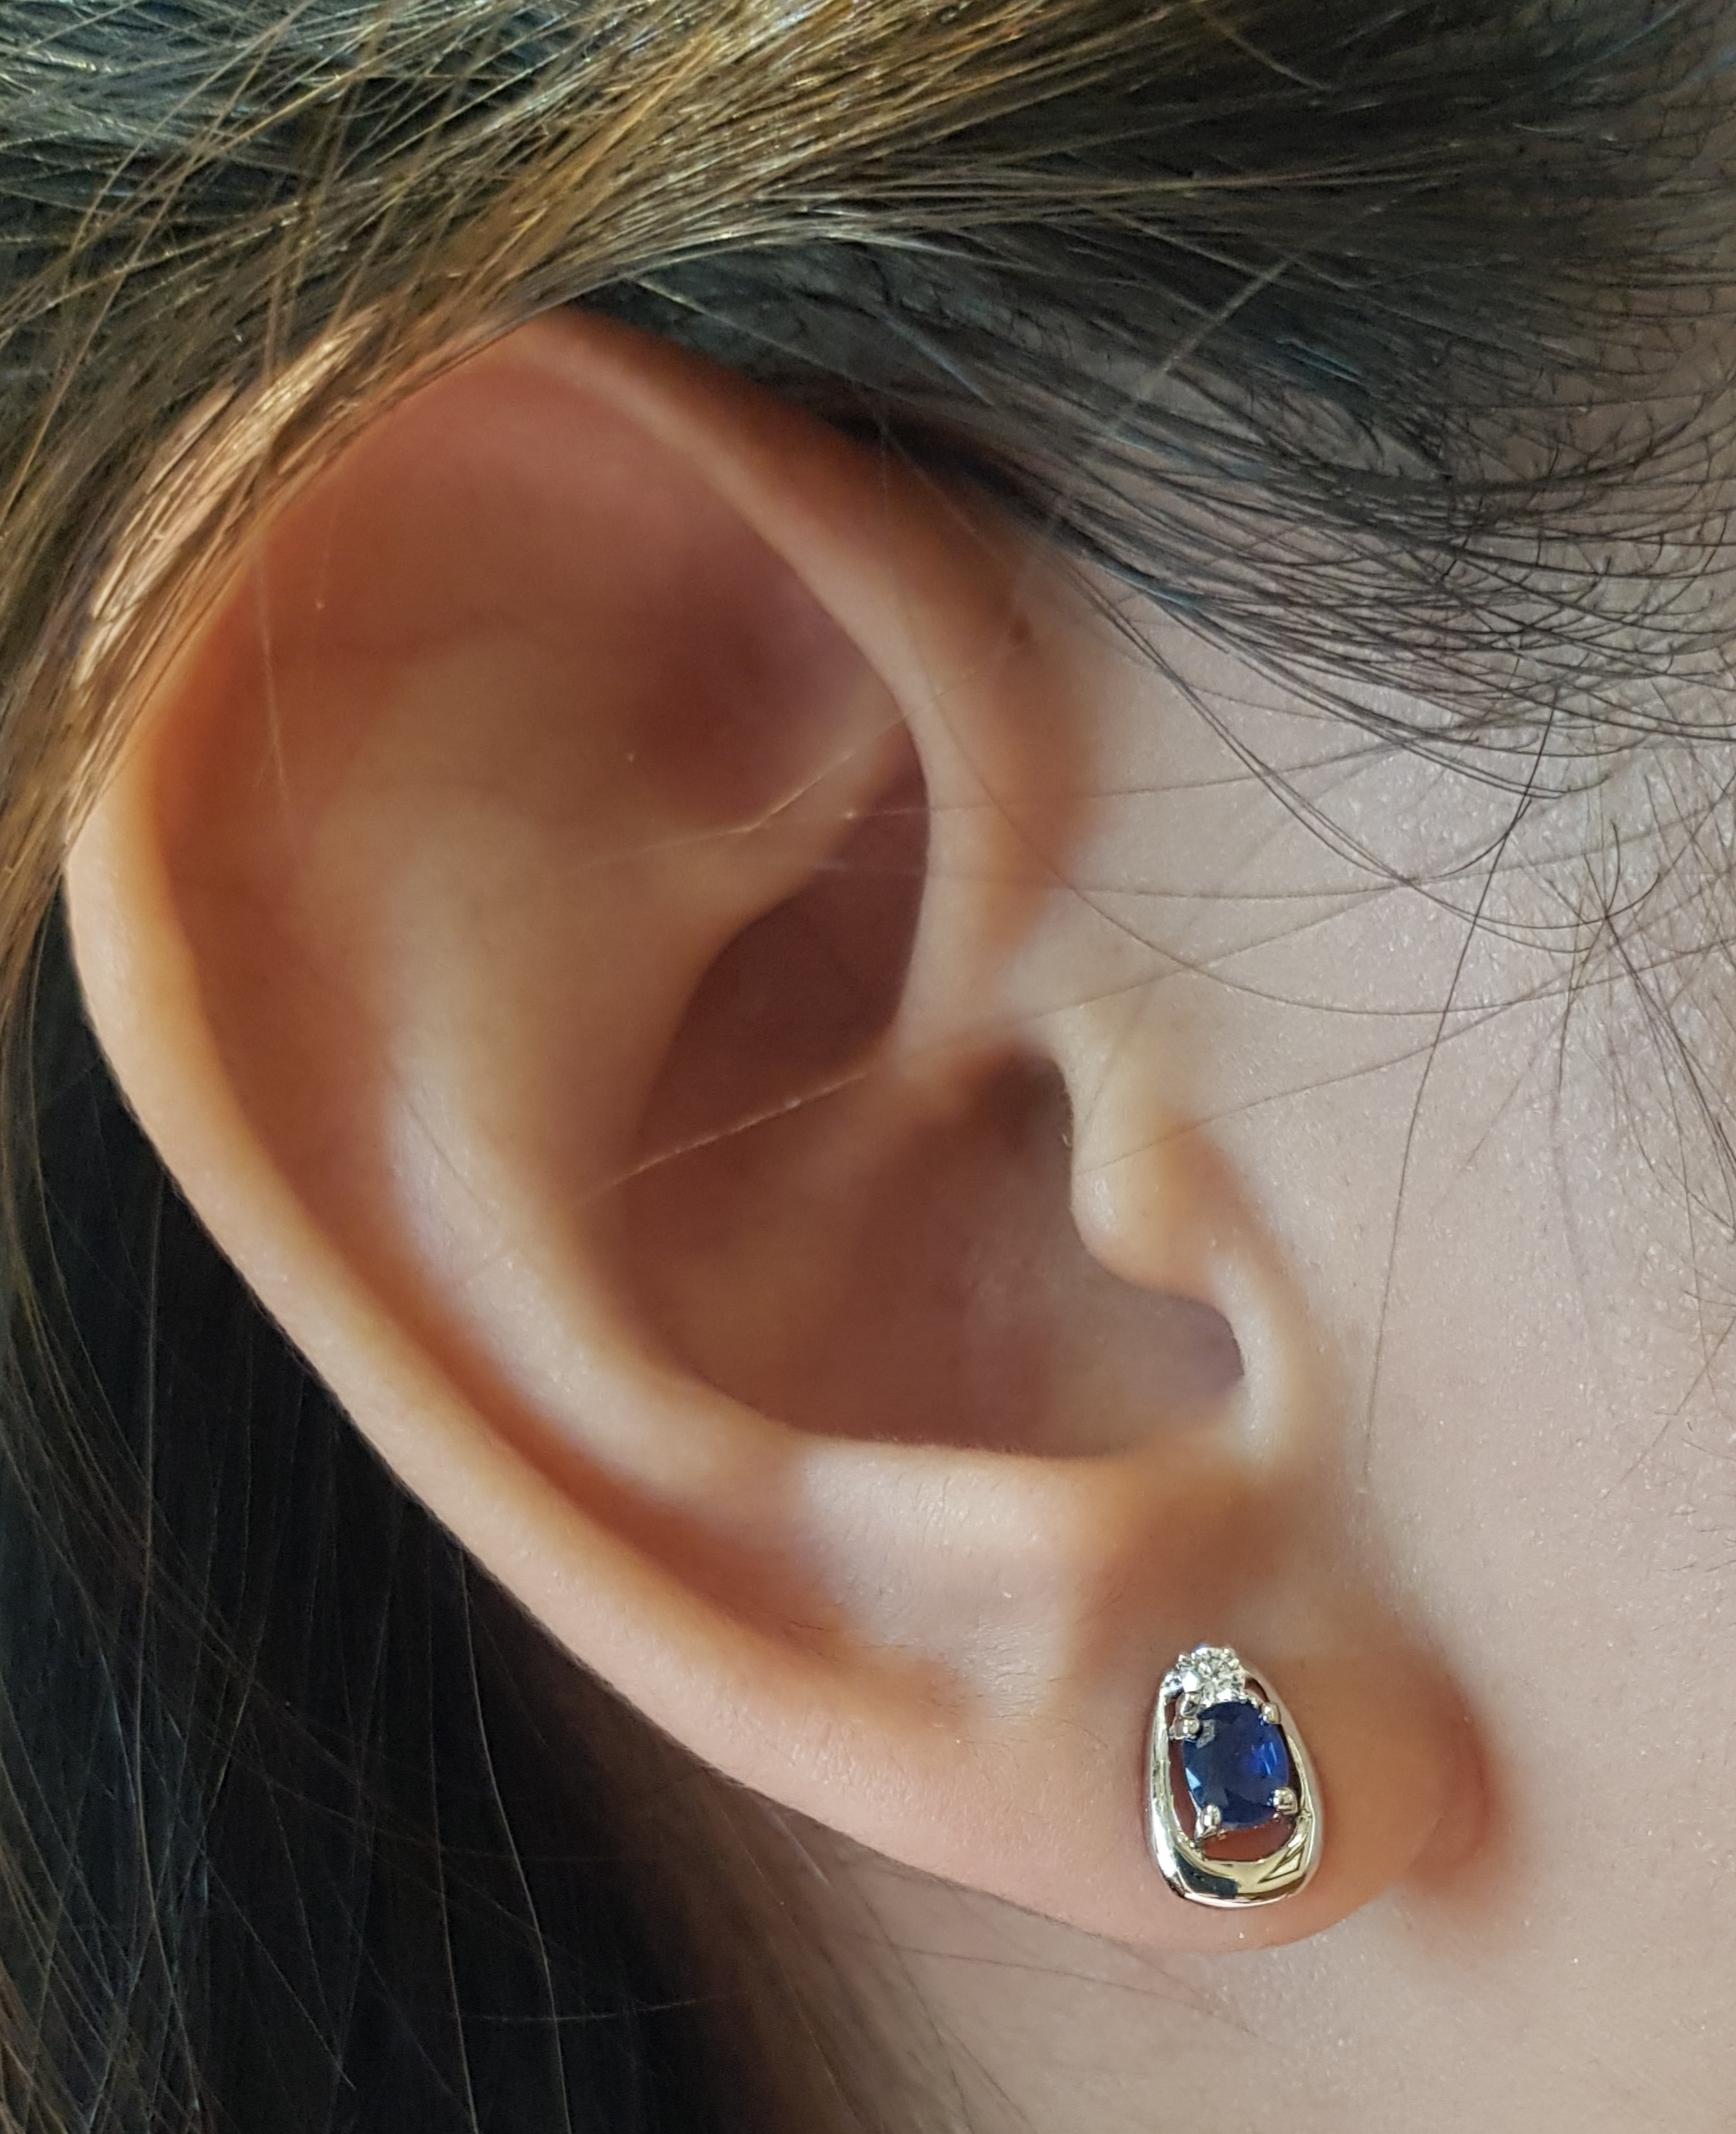 Blue Sapphire 0.64 carat with Diamond 0.08 carat Earrings set in 18 Karat White Gold Settings

Width:  0.7 cm 
Length:  0.9 cm
Total Weight: 3.02 grams

